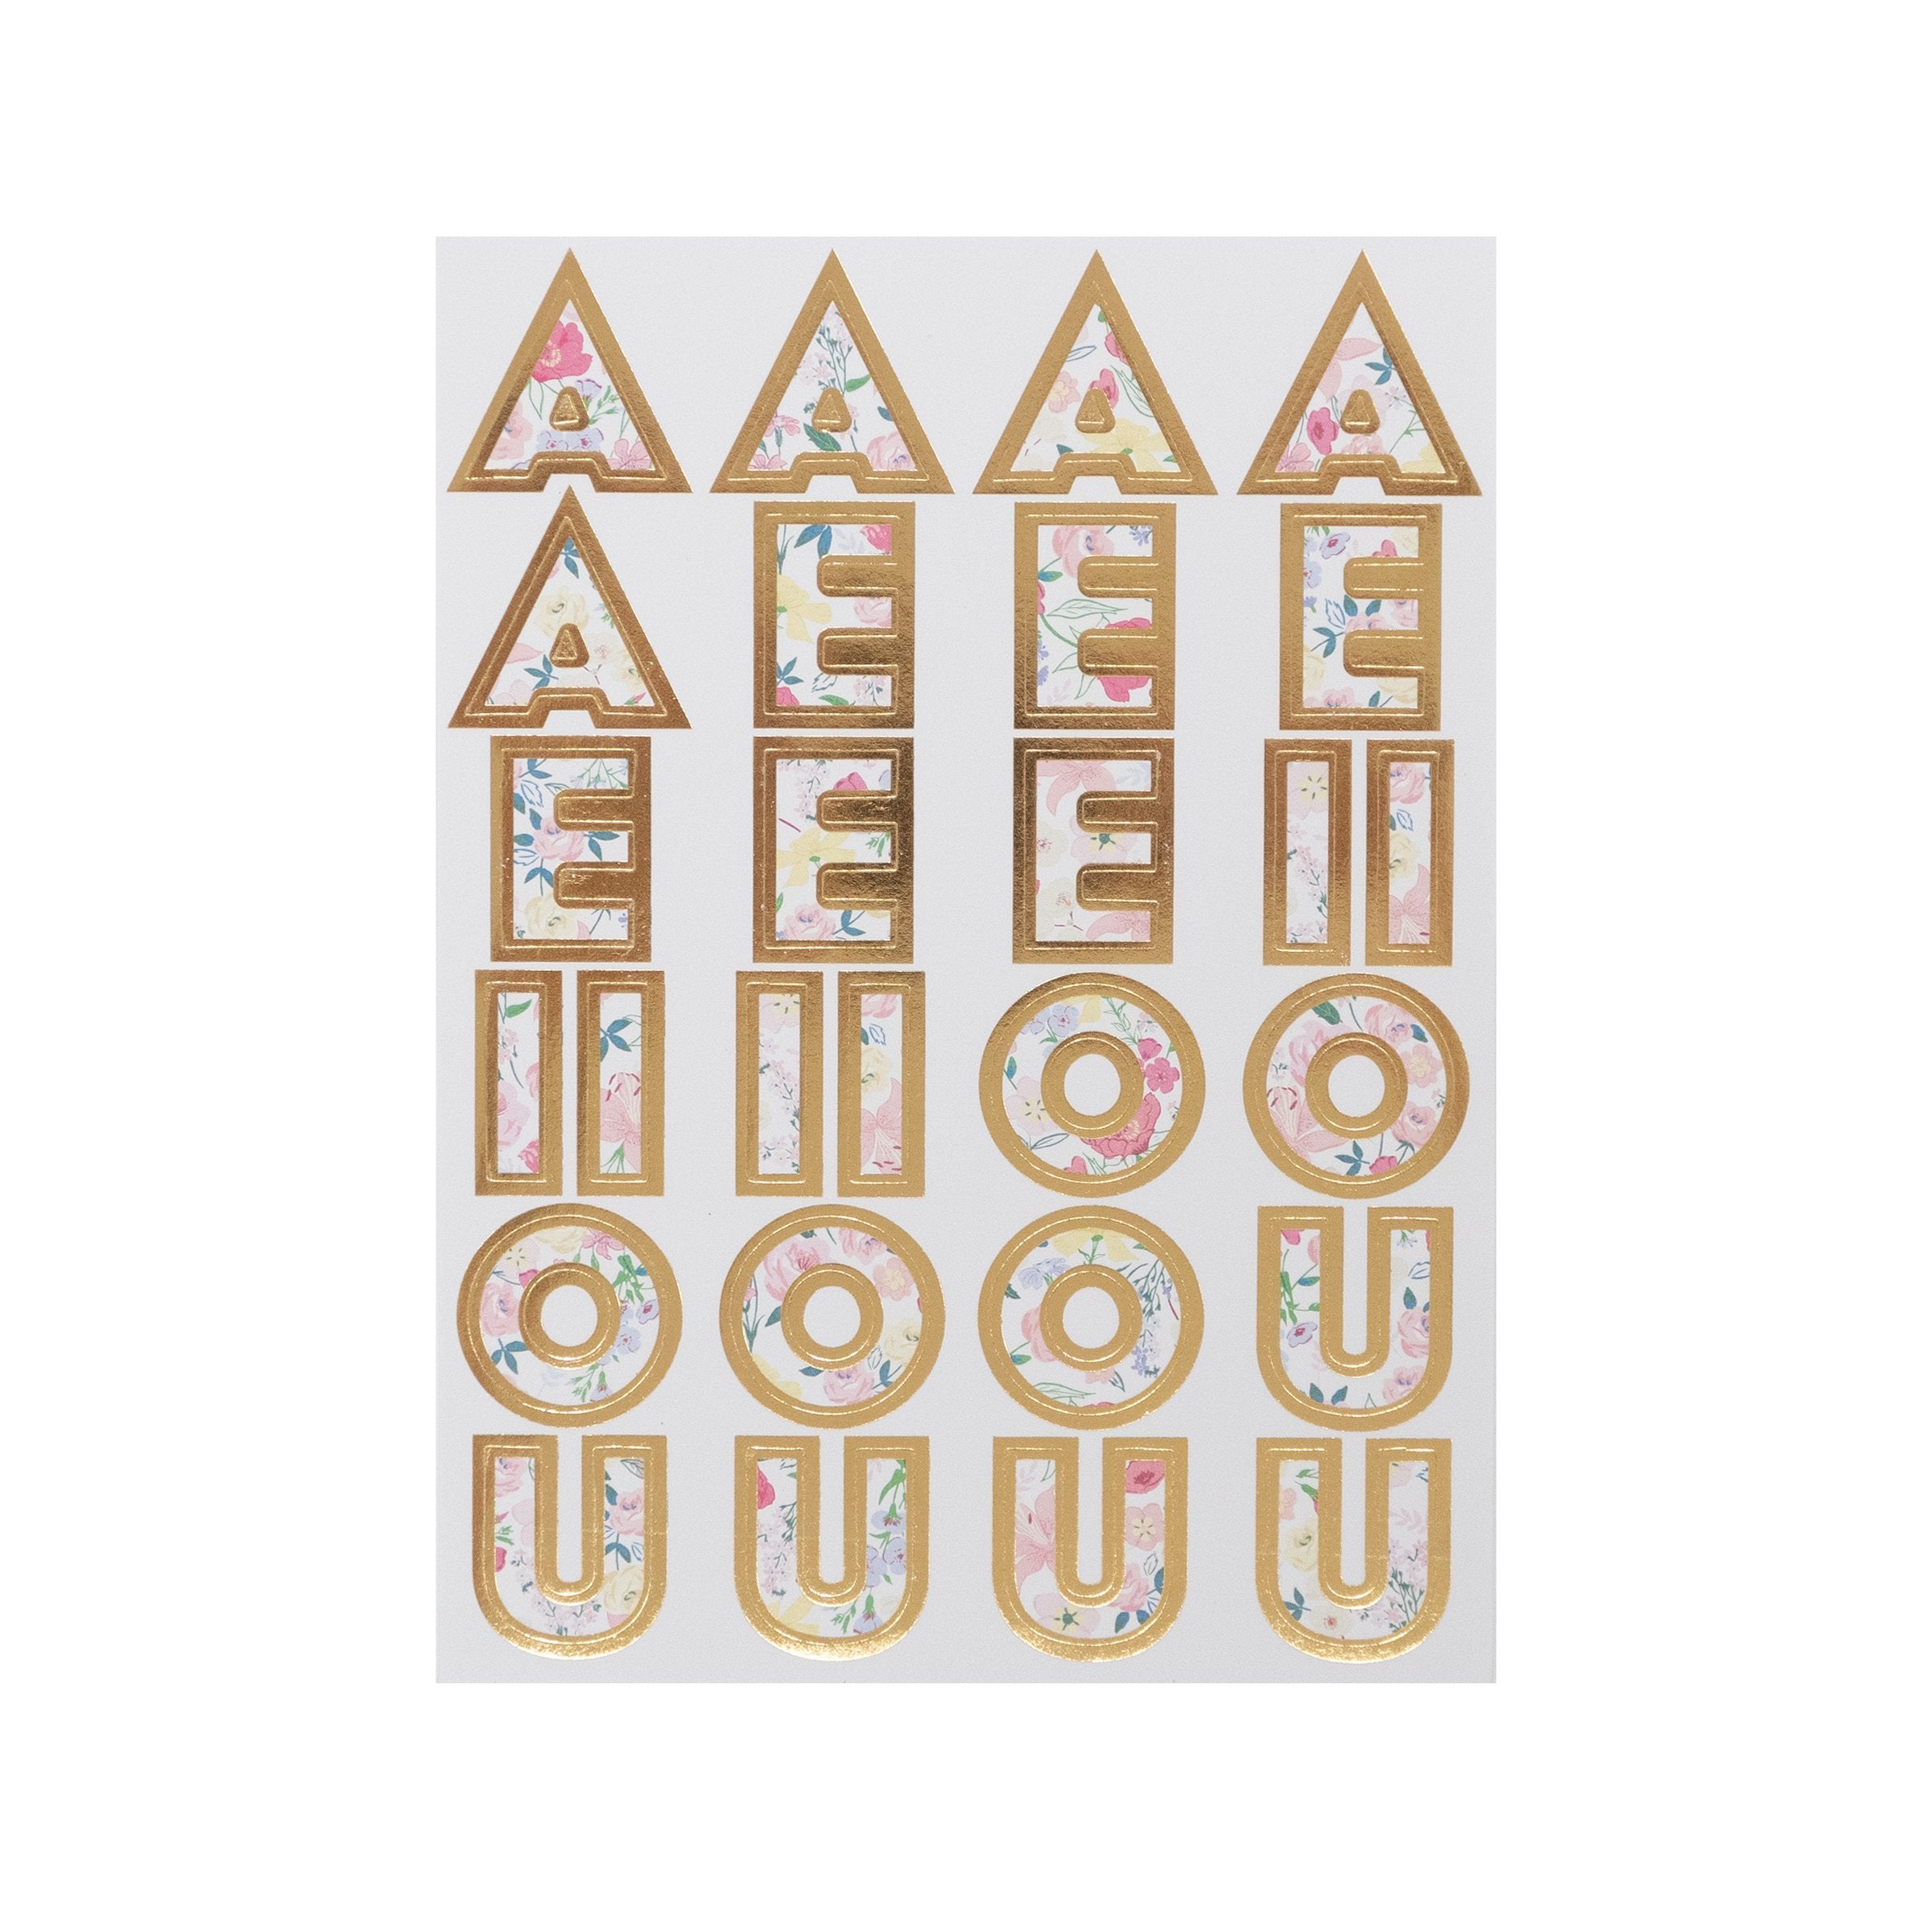 Meri Meri Gold Glitter Alphabet Stickers